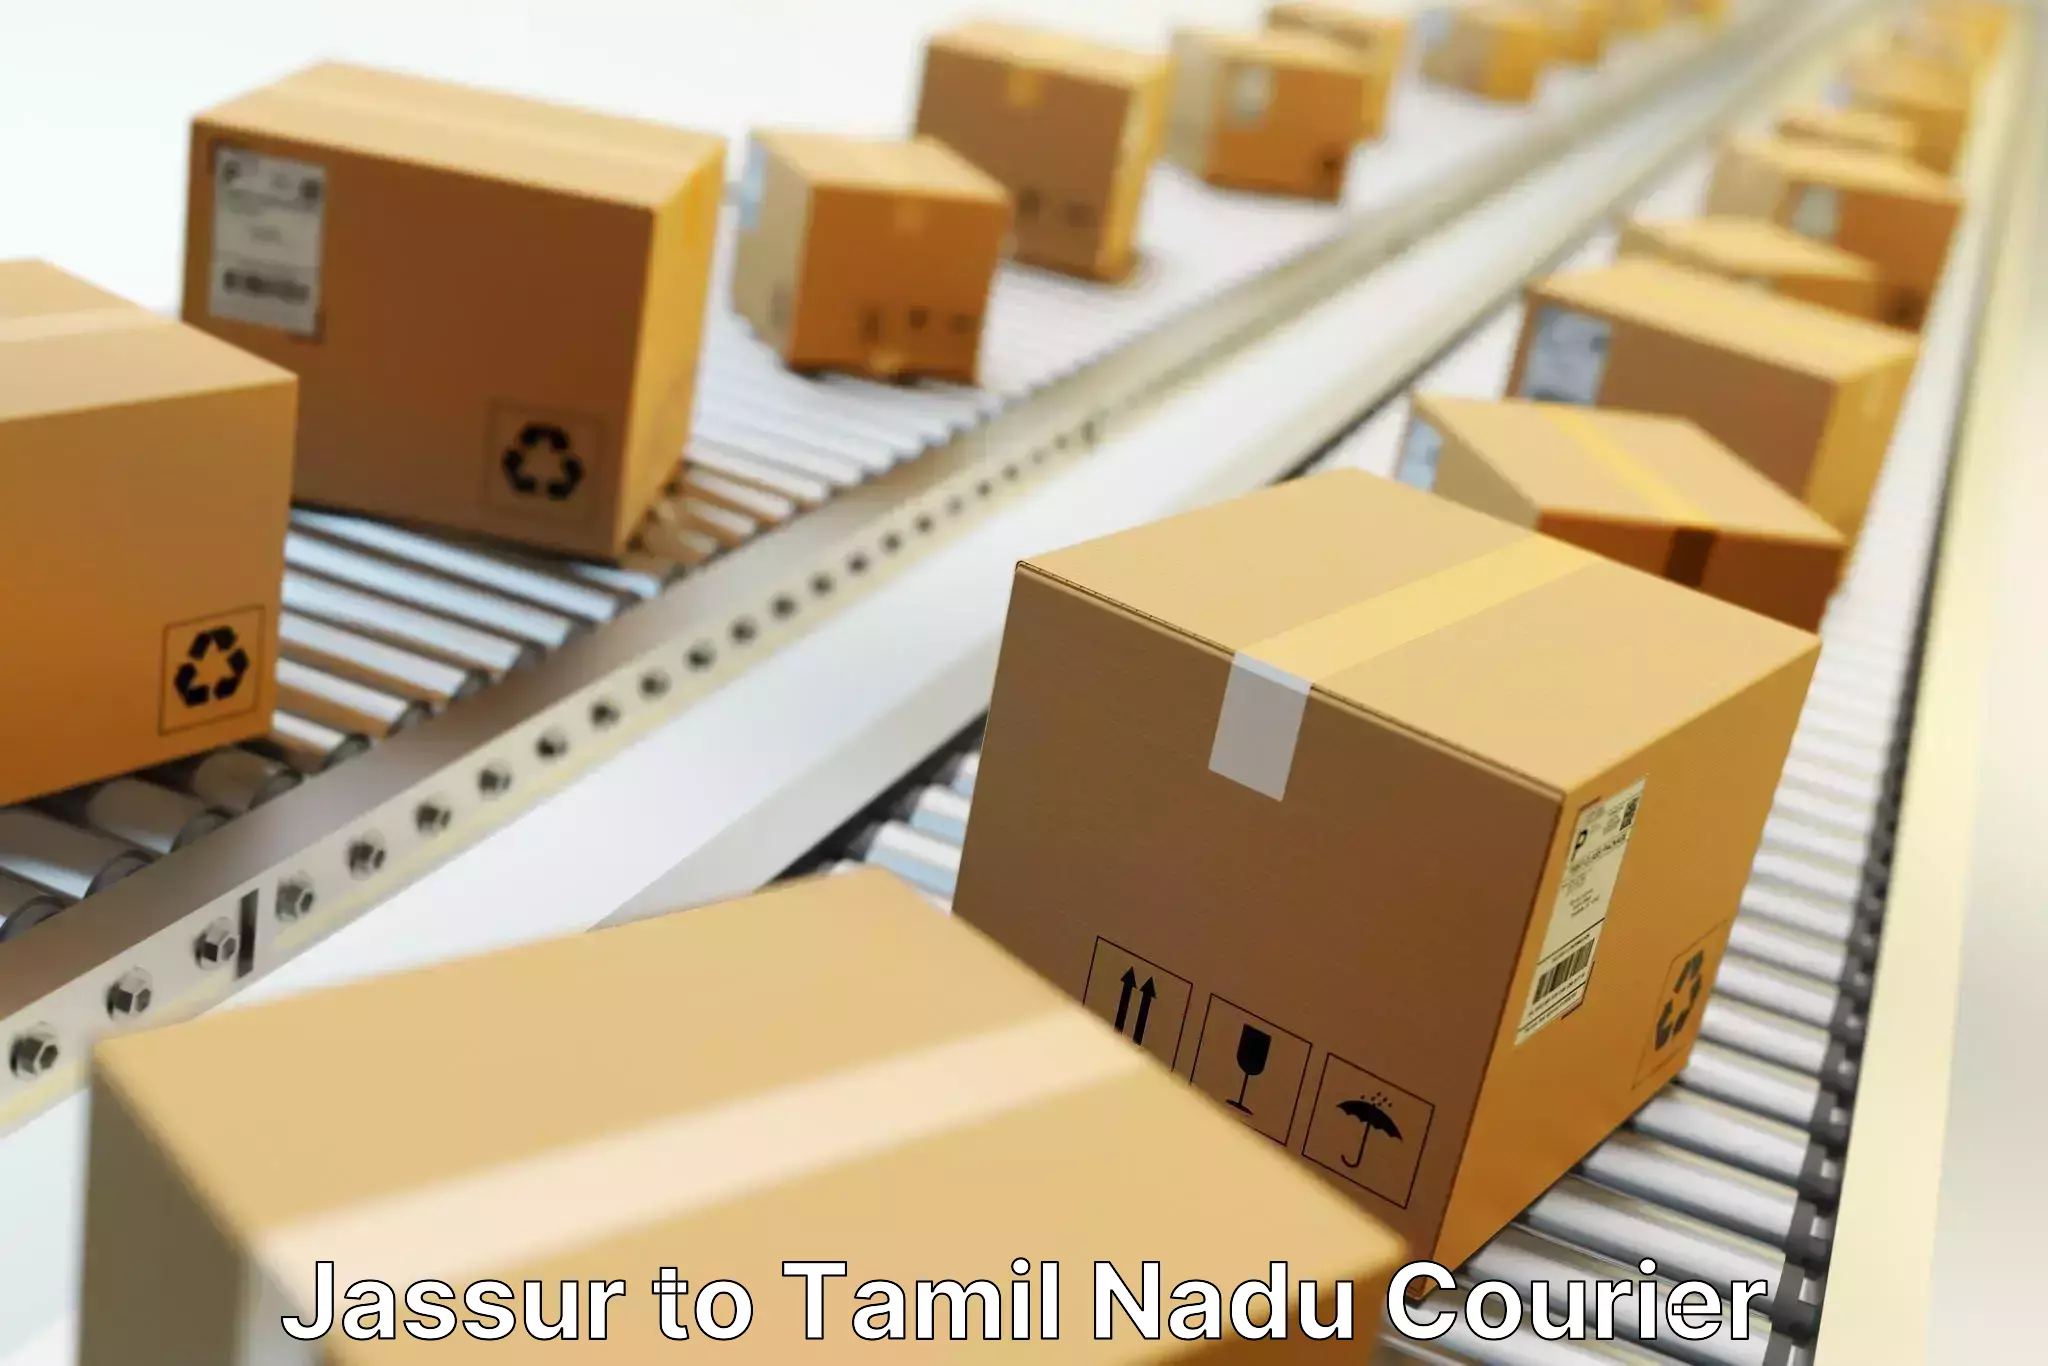 Courier service innovation Jassur to Tamil Nadu